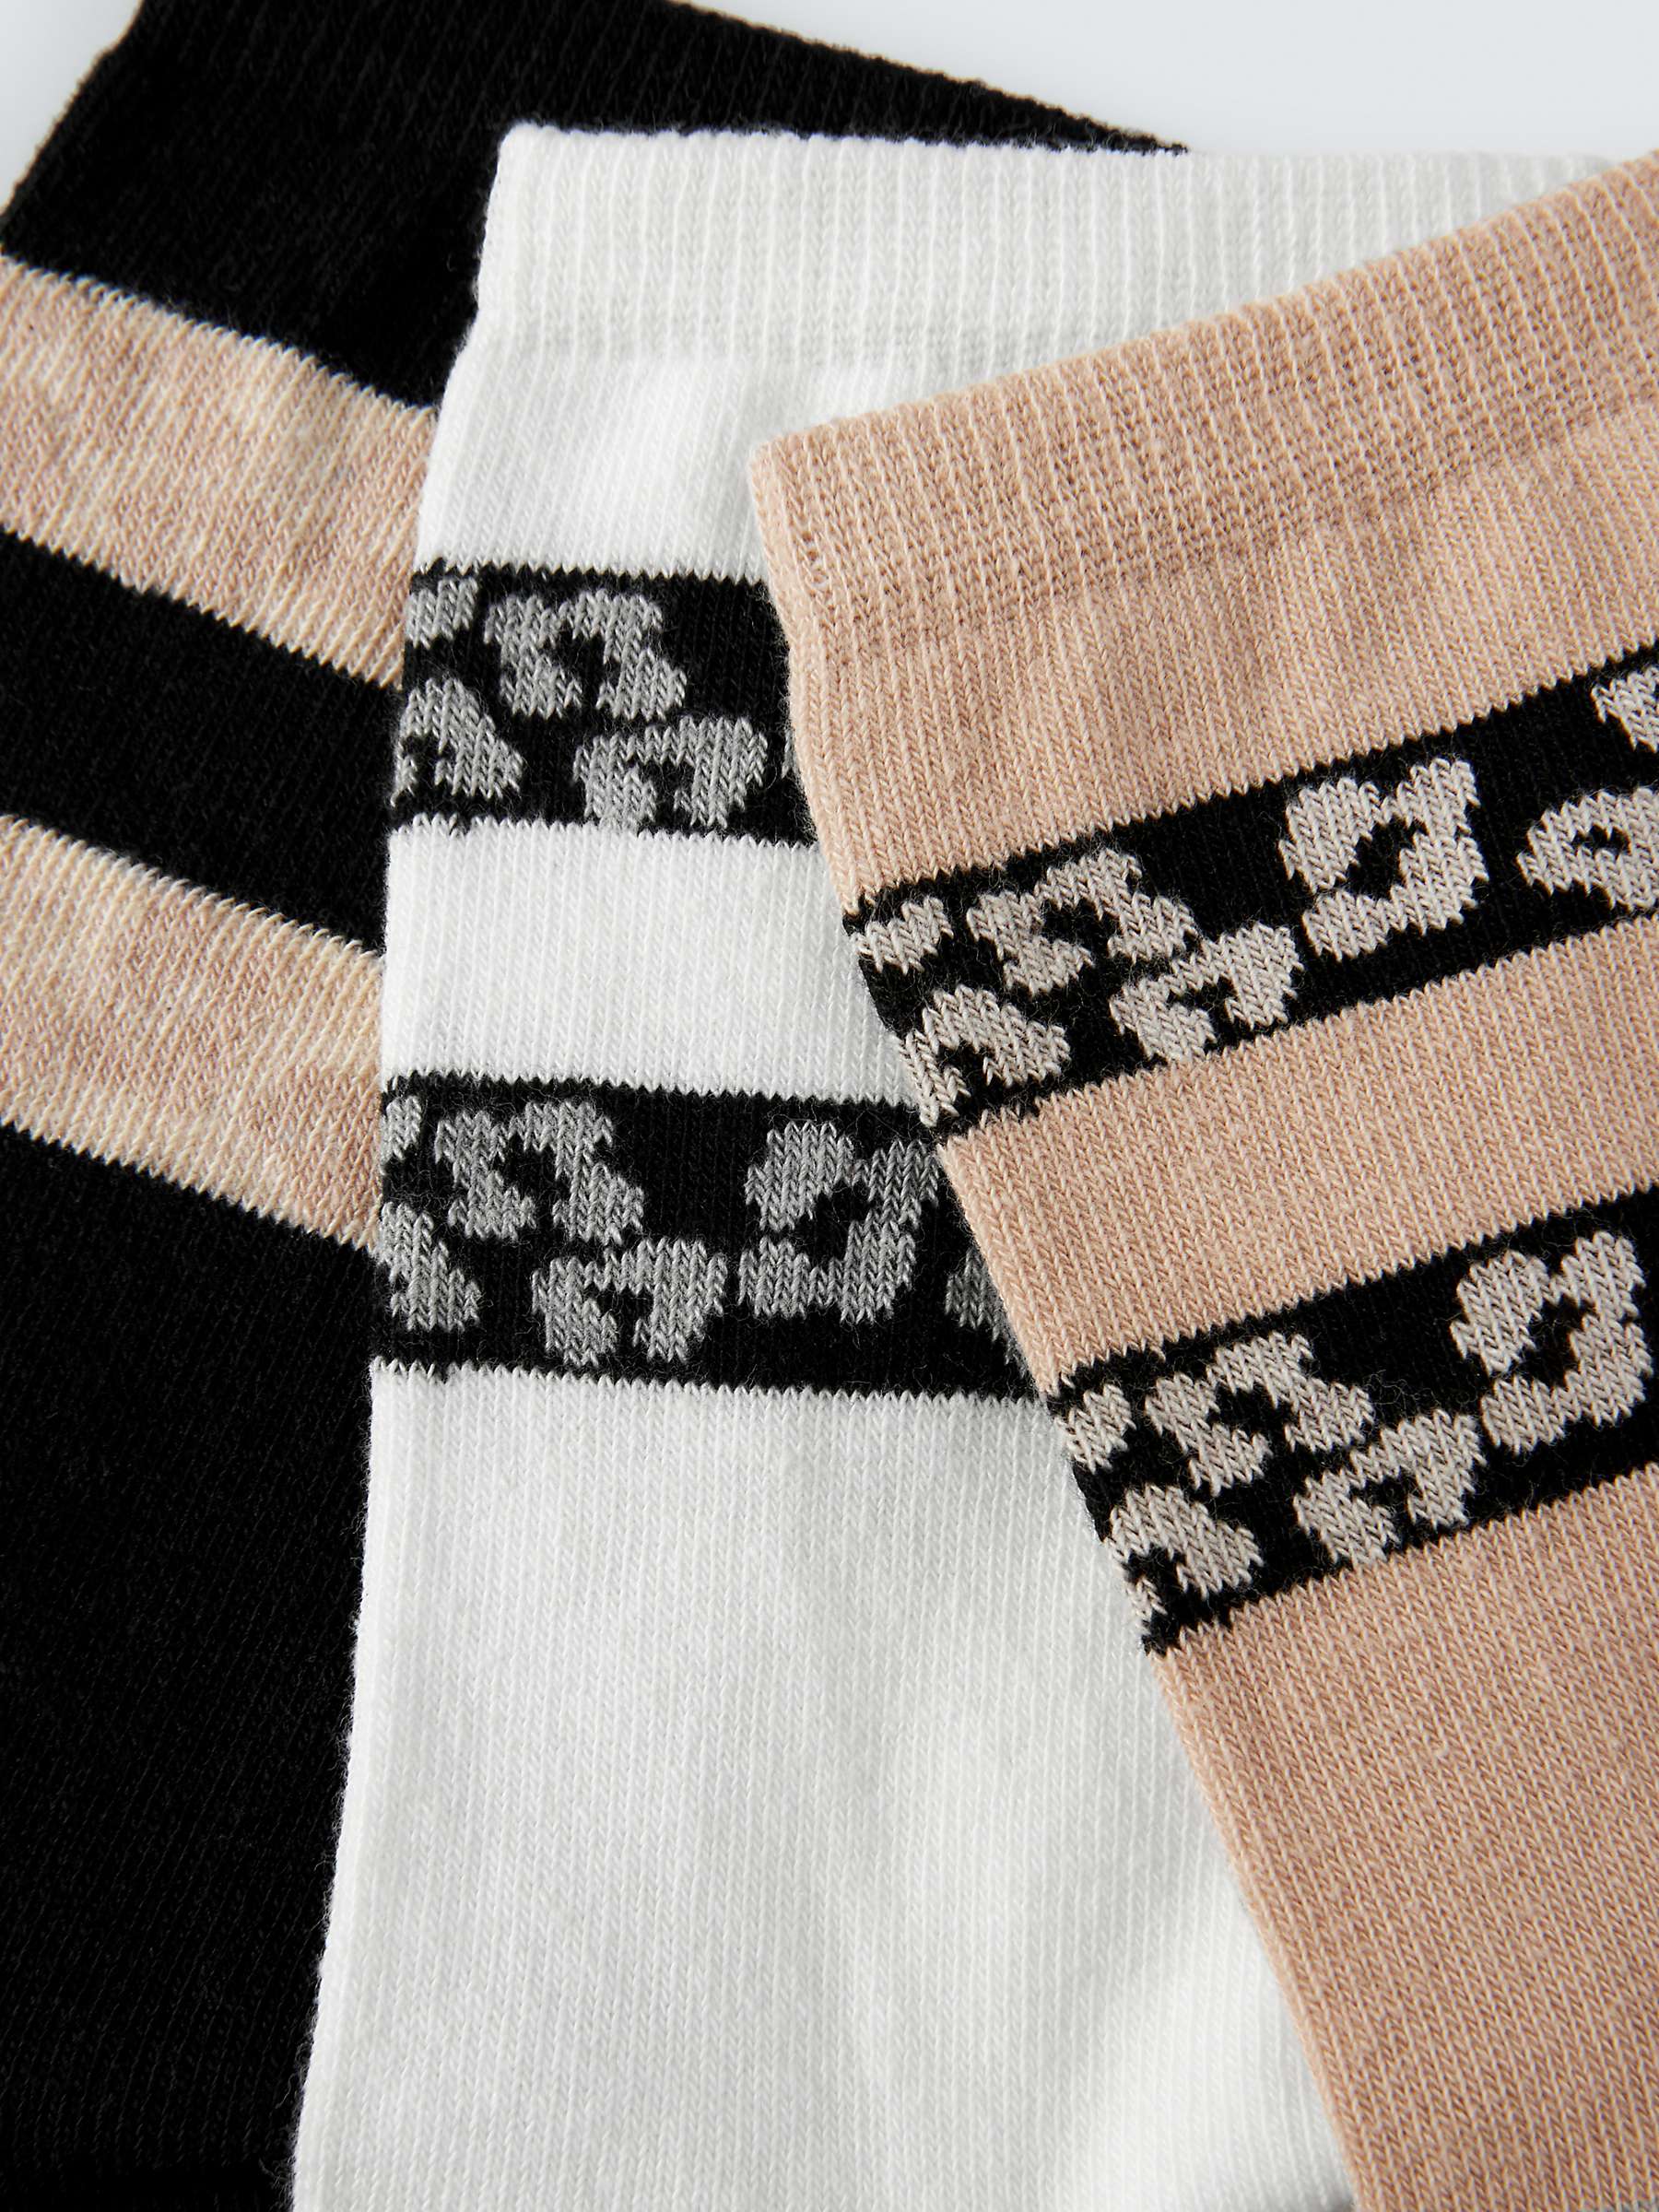 Buy John Lewis Animal Spot Print Ankle Socks, Pack of 3, Natural/Multi Online at johnlewis.com